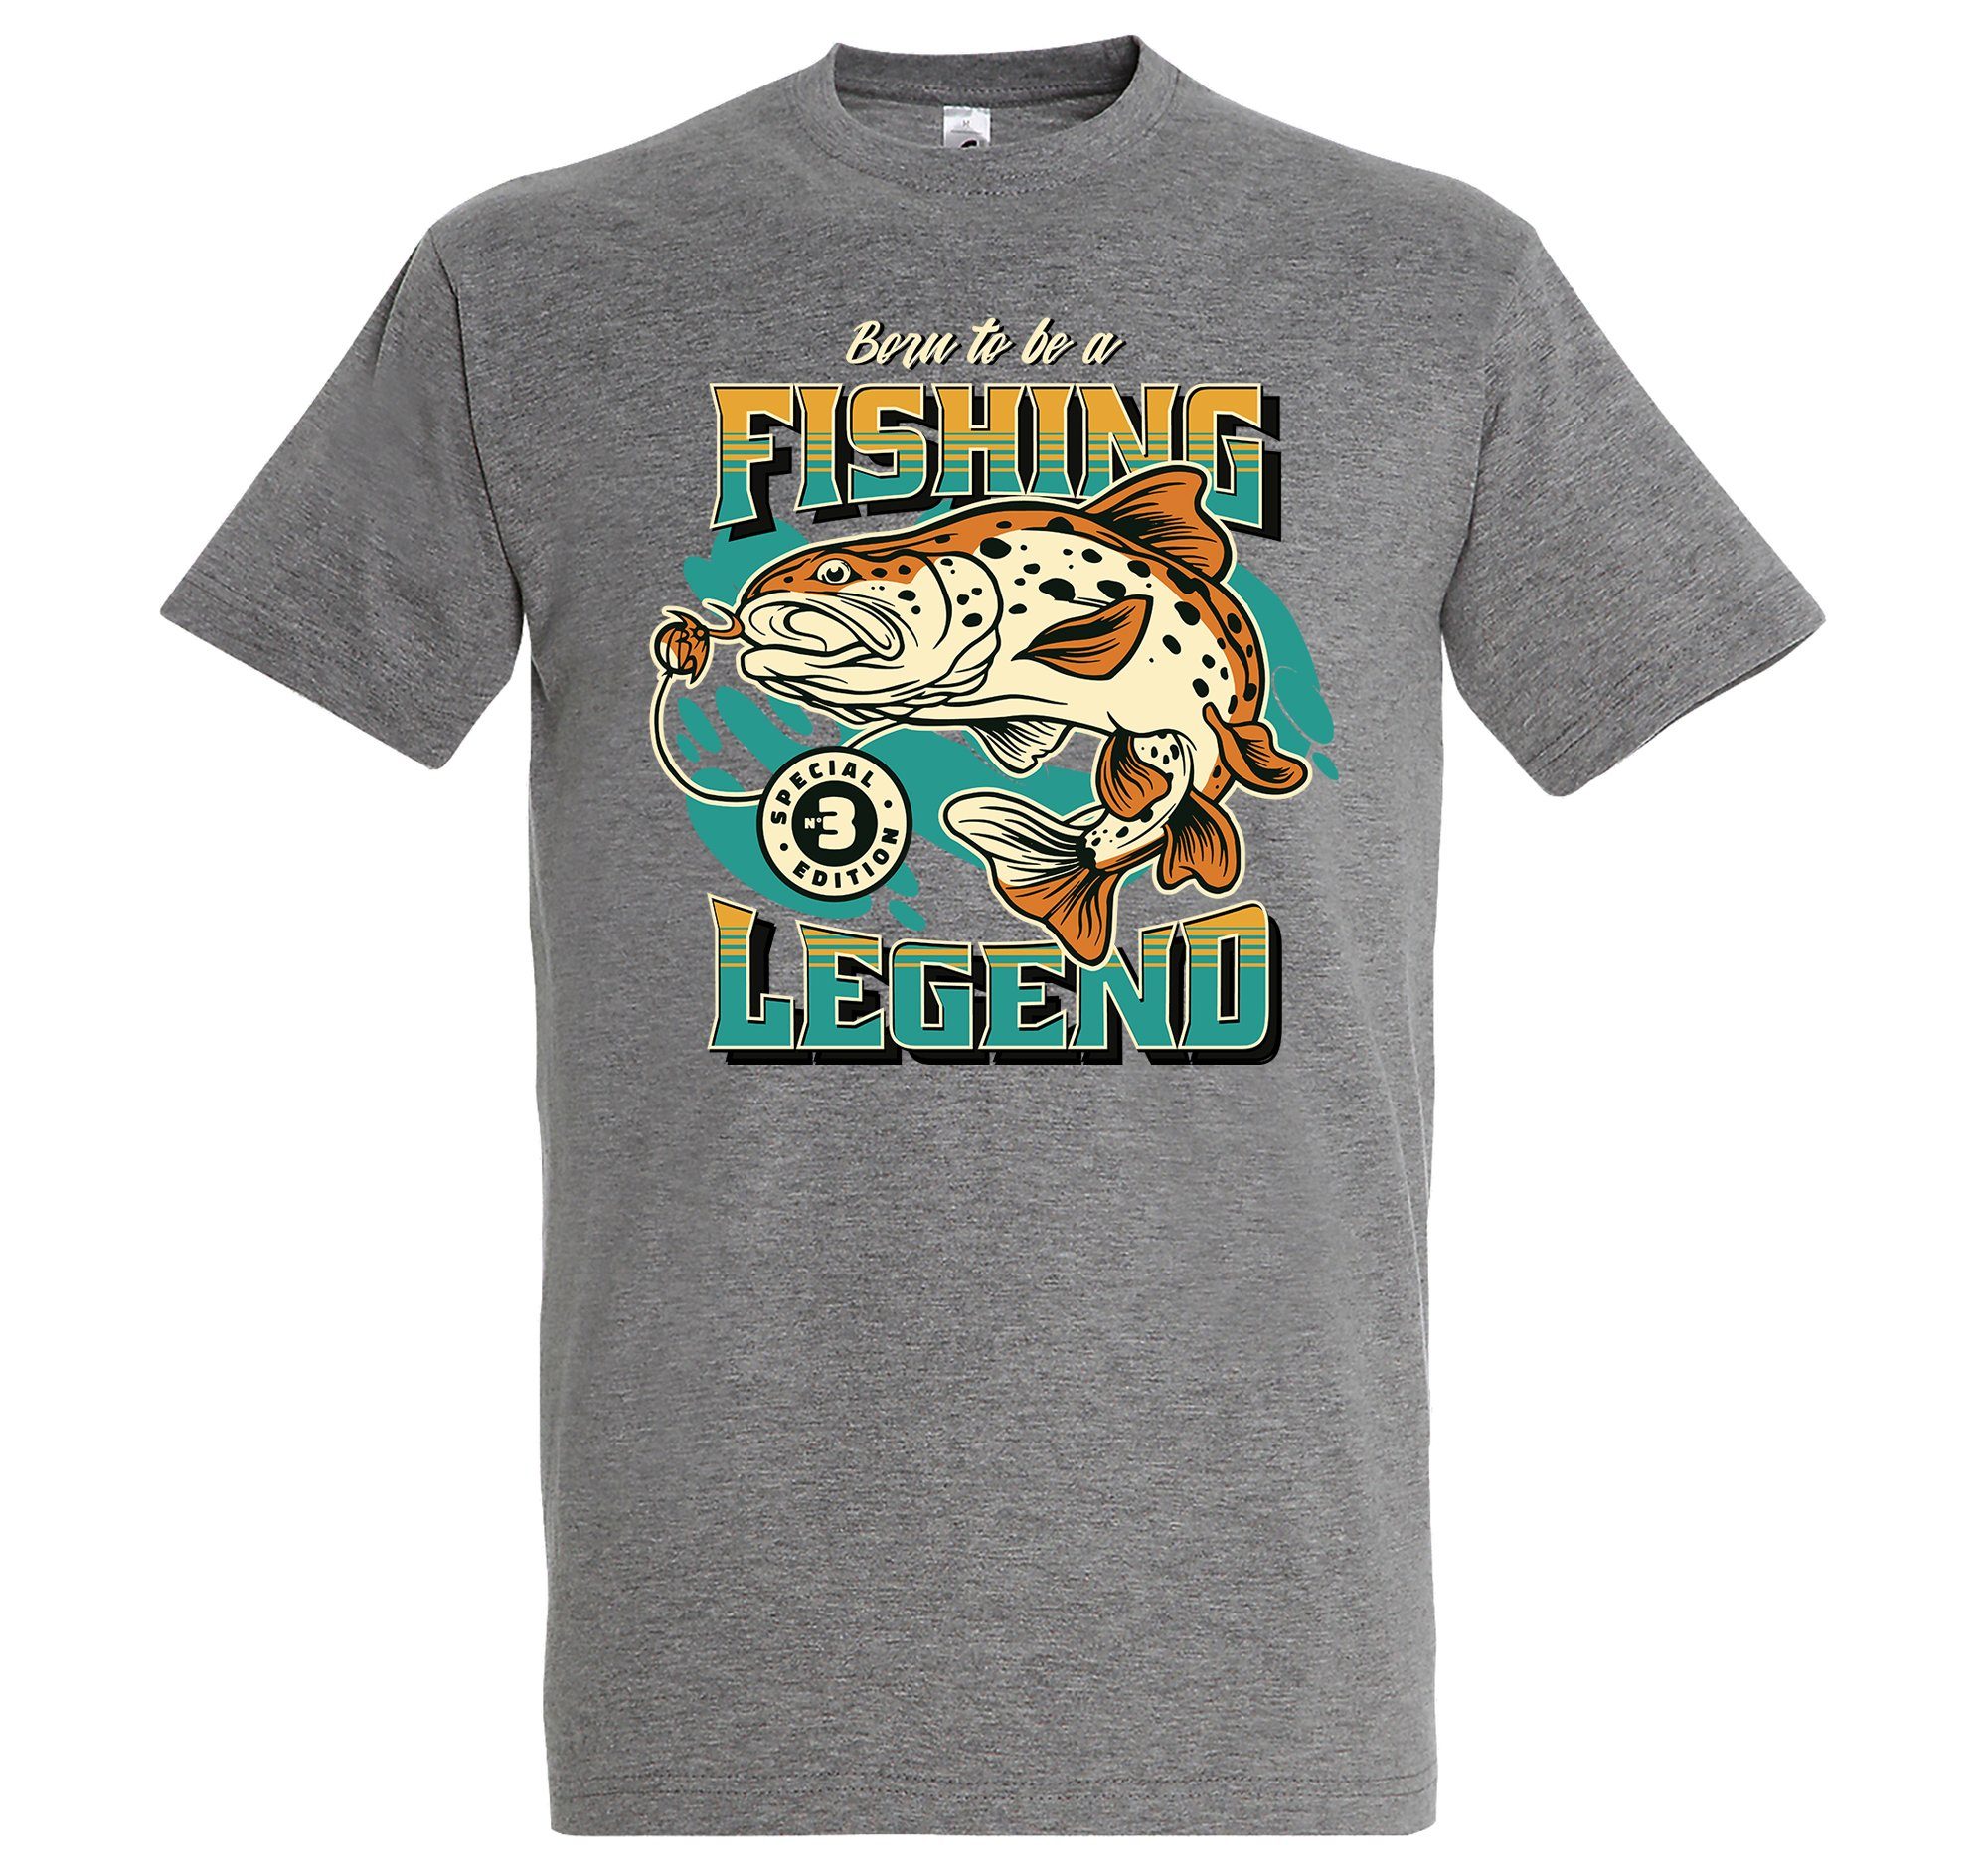 Youth Designz T-Shirt "Born Grau Fishing To mit Be (gerader trendigem A Frontprint Legend" Abschluss) Herren Shirt